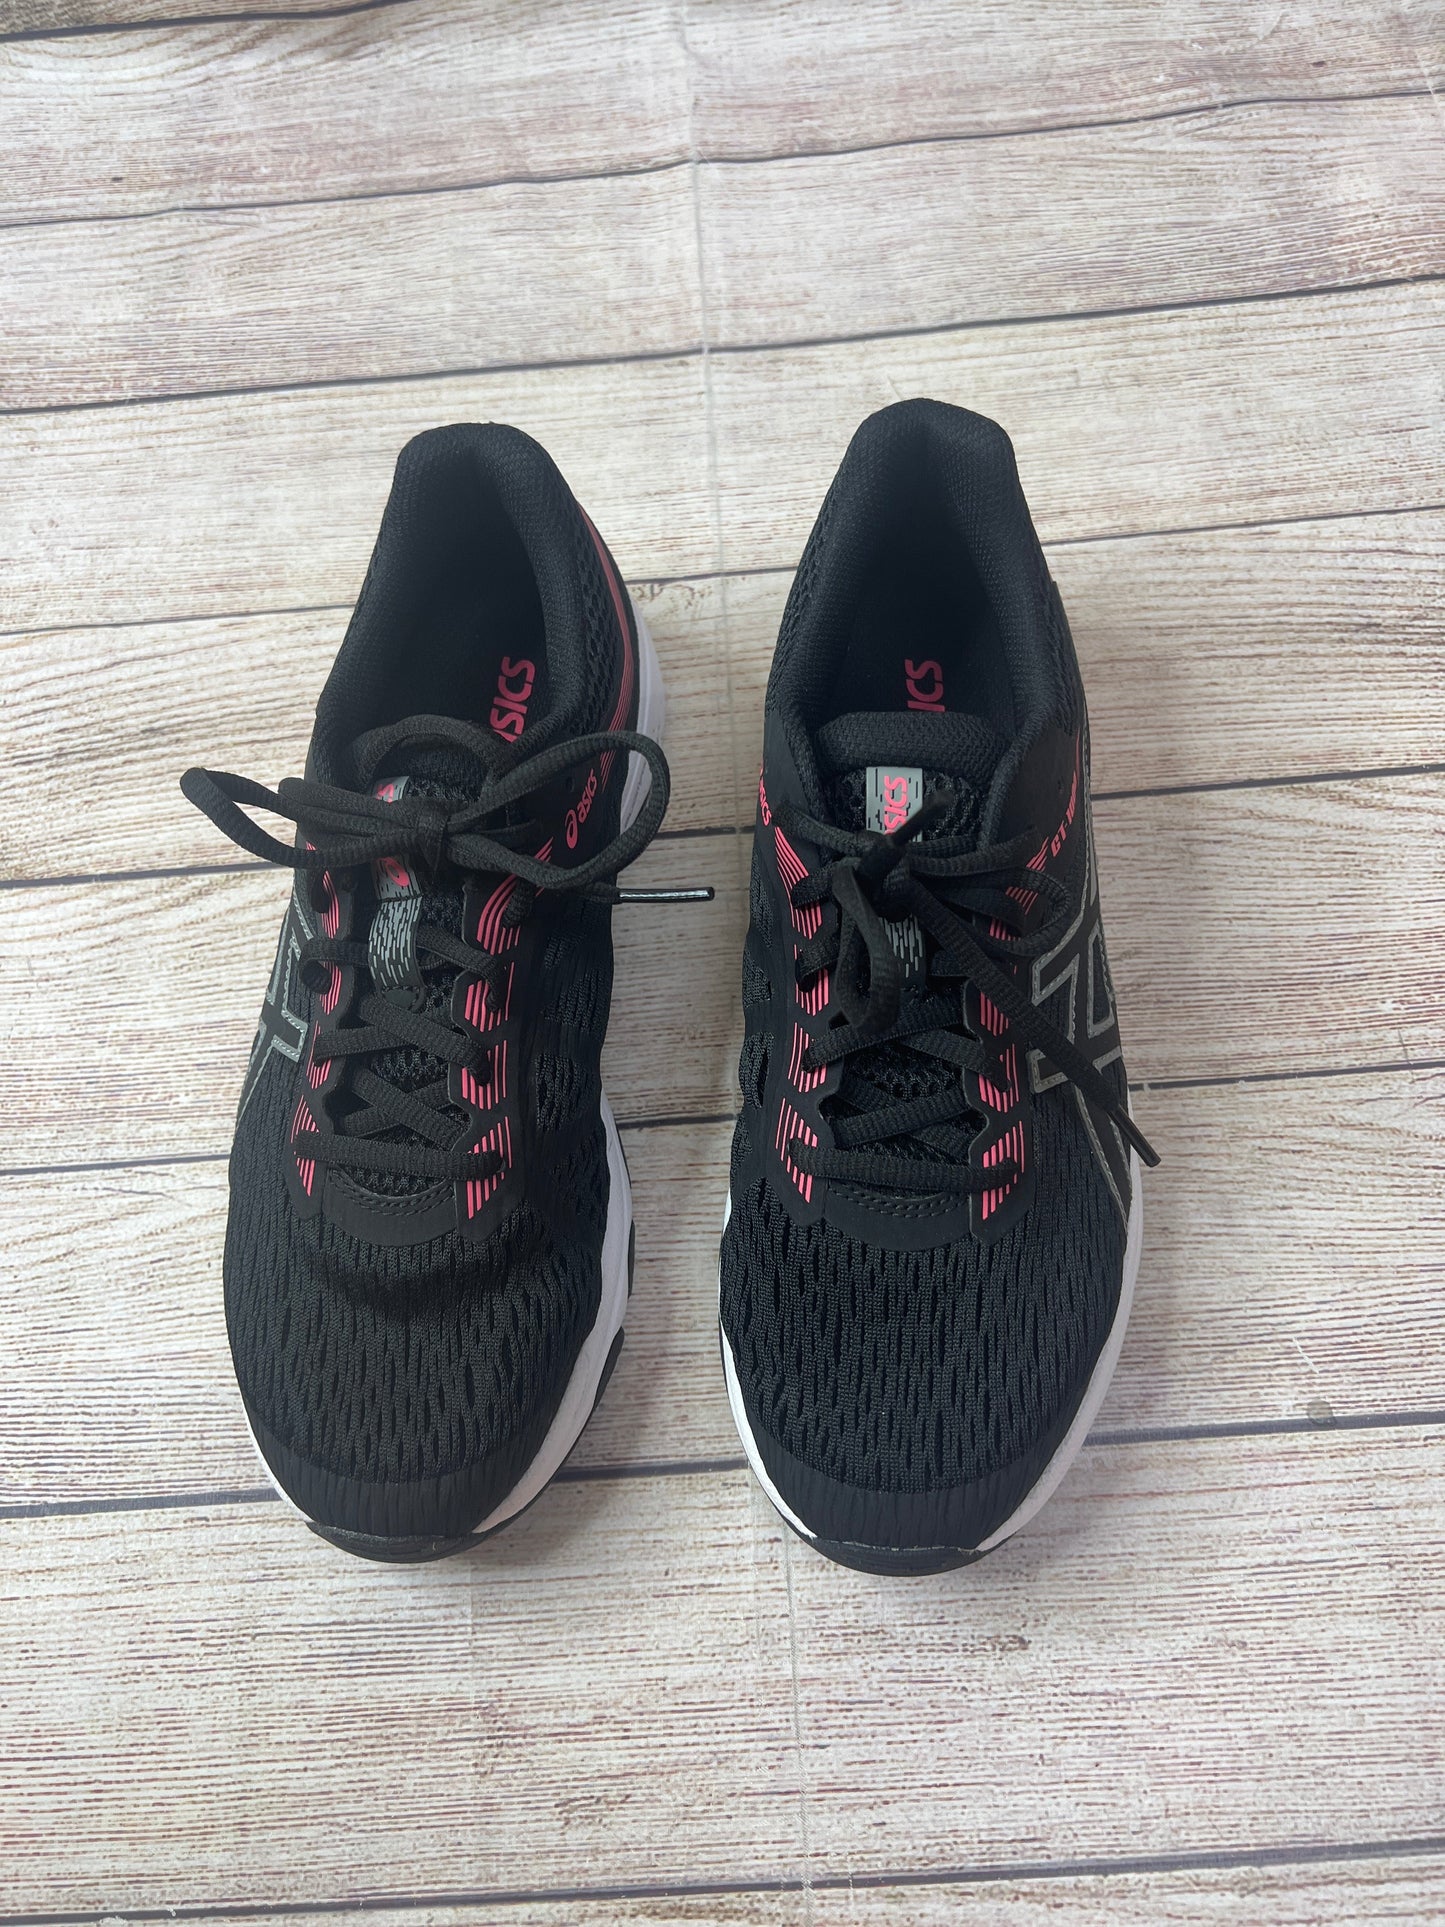 Black & Pink Shoes Athletic Asics, Size 6